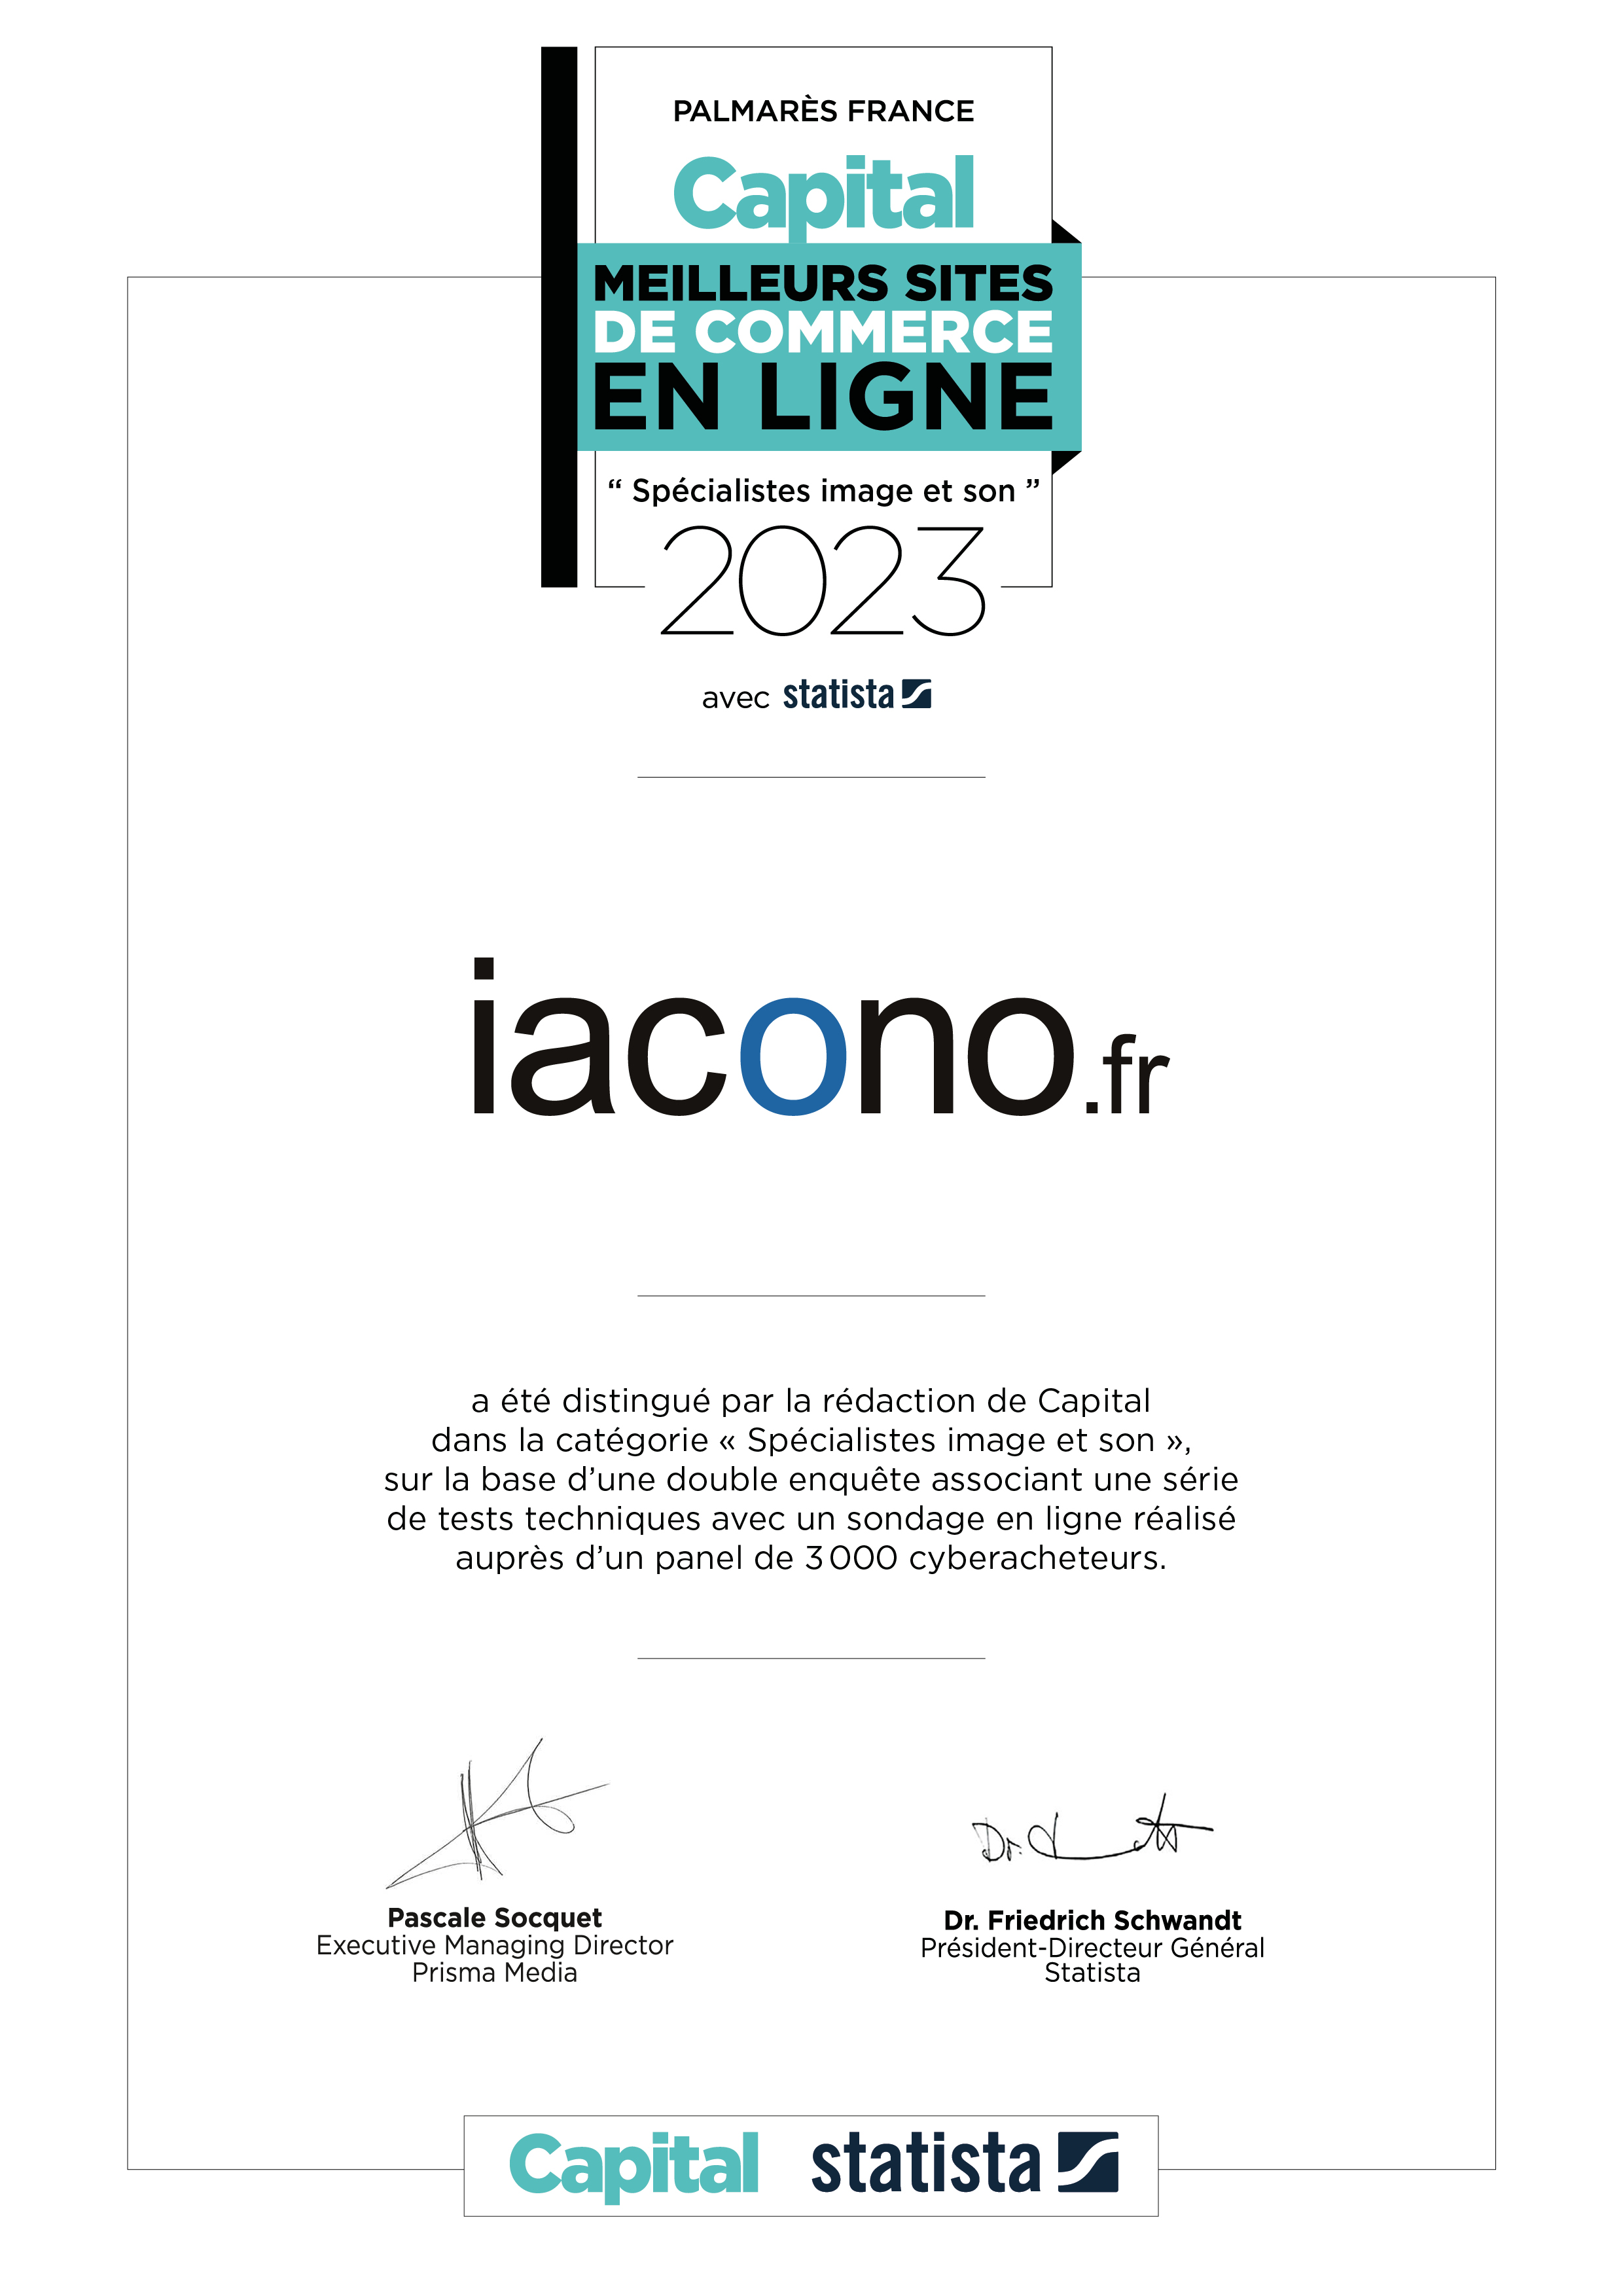 Capital iacono.fr award certificate Best e-commerce website